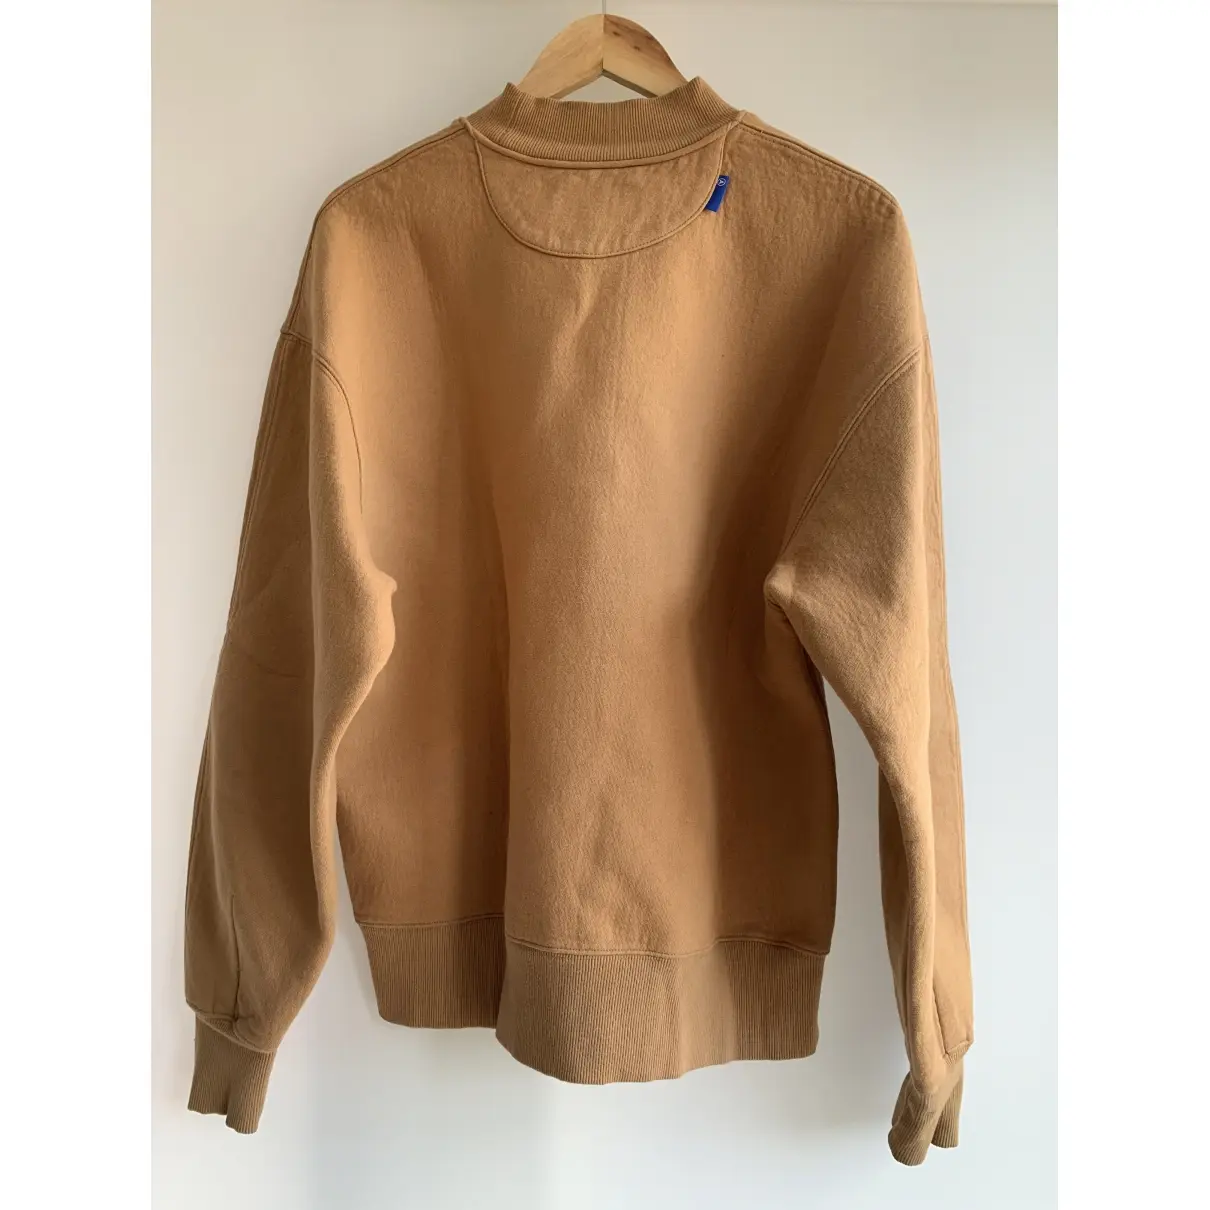 Buy Ader Error Camel Cotton Knitwear & Sweatshirt online